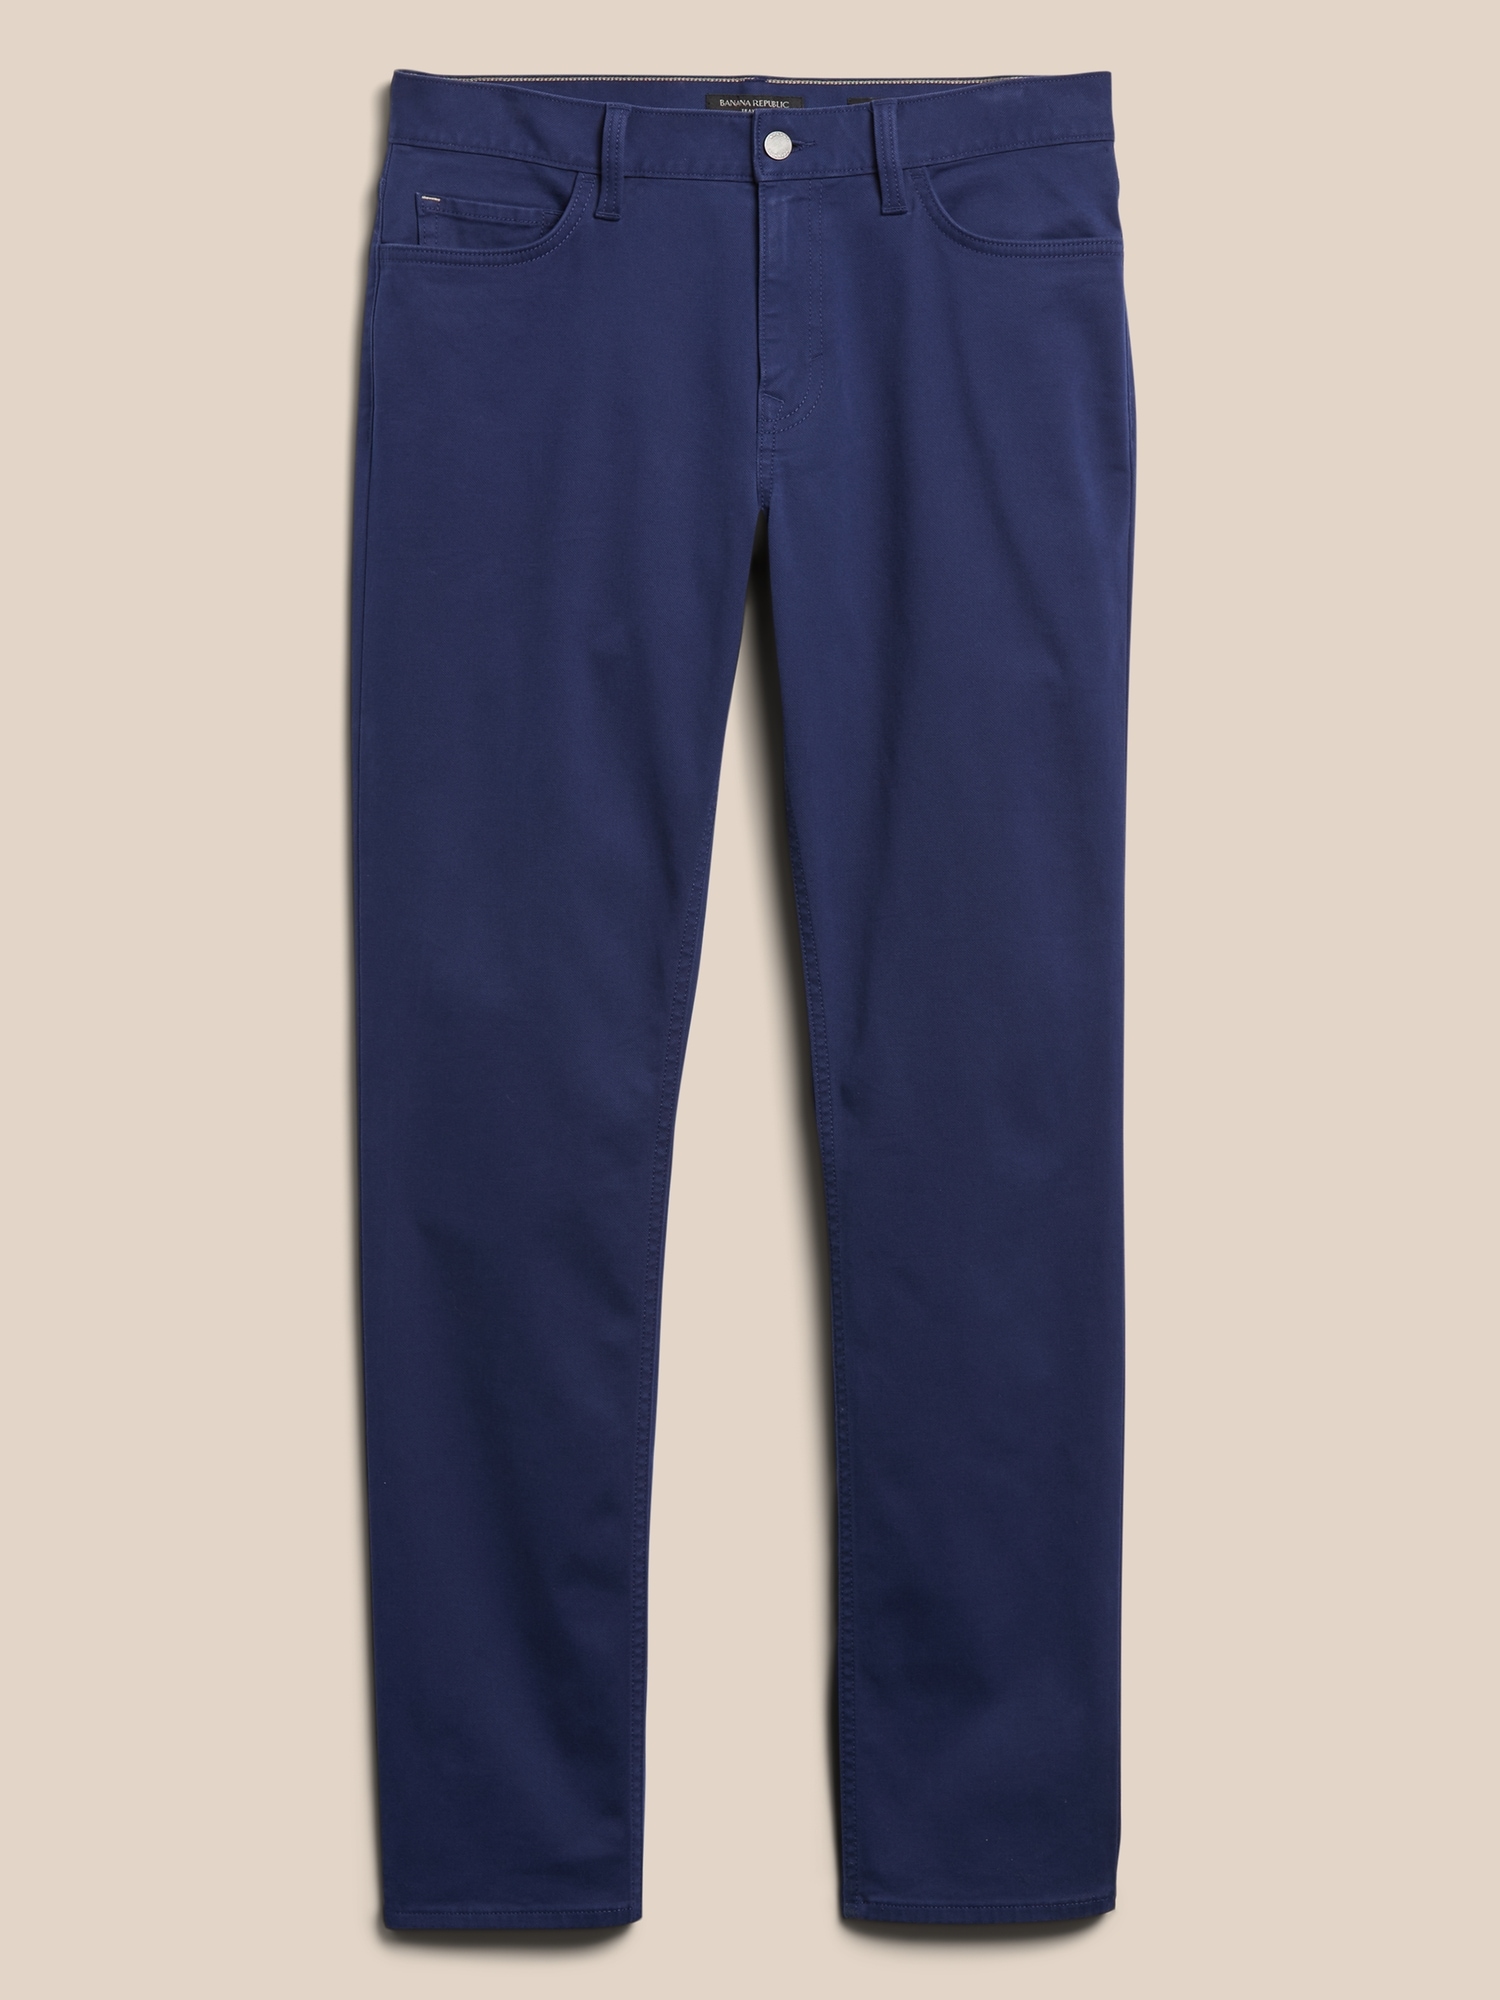 25% OFF Banana Republic Slim Fit Traveler Jeans Size 33x31 Navy Blue ...